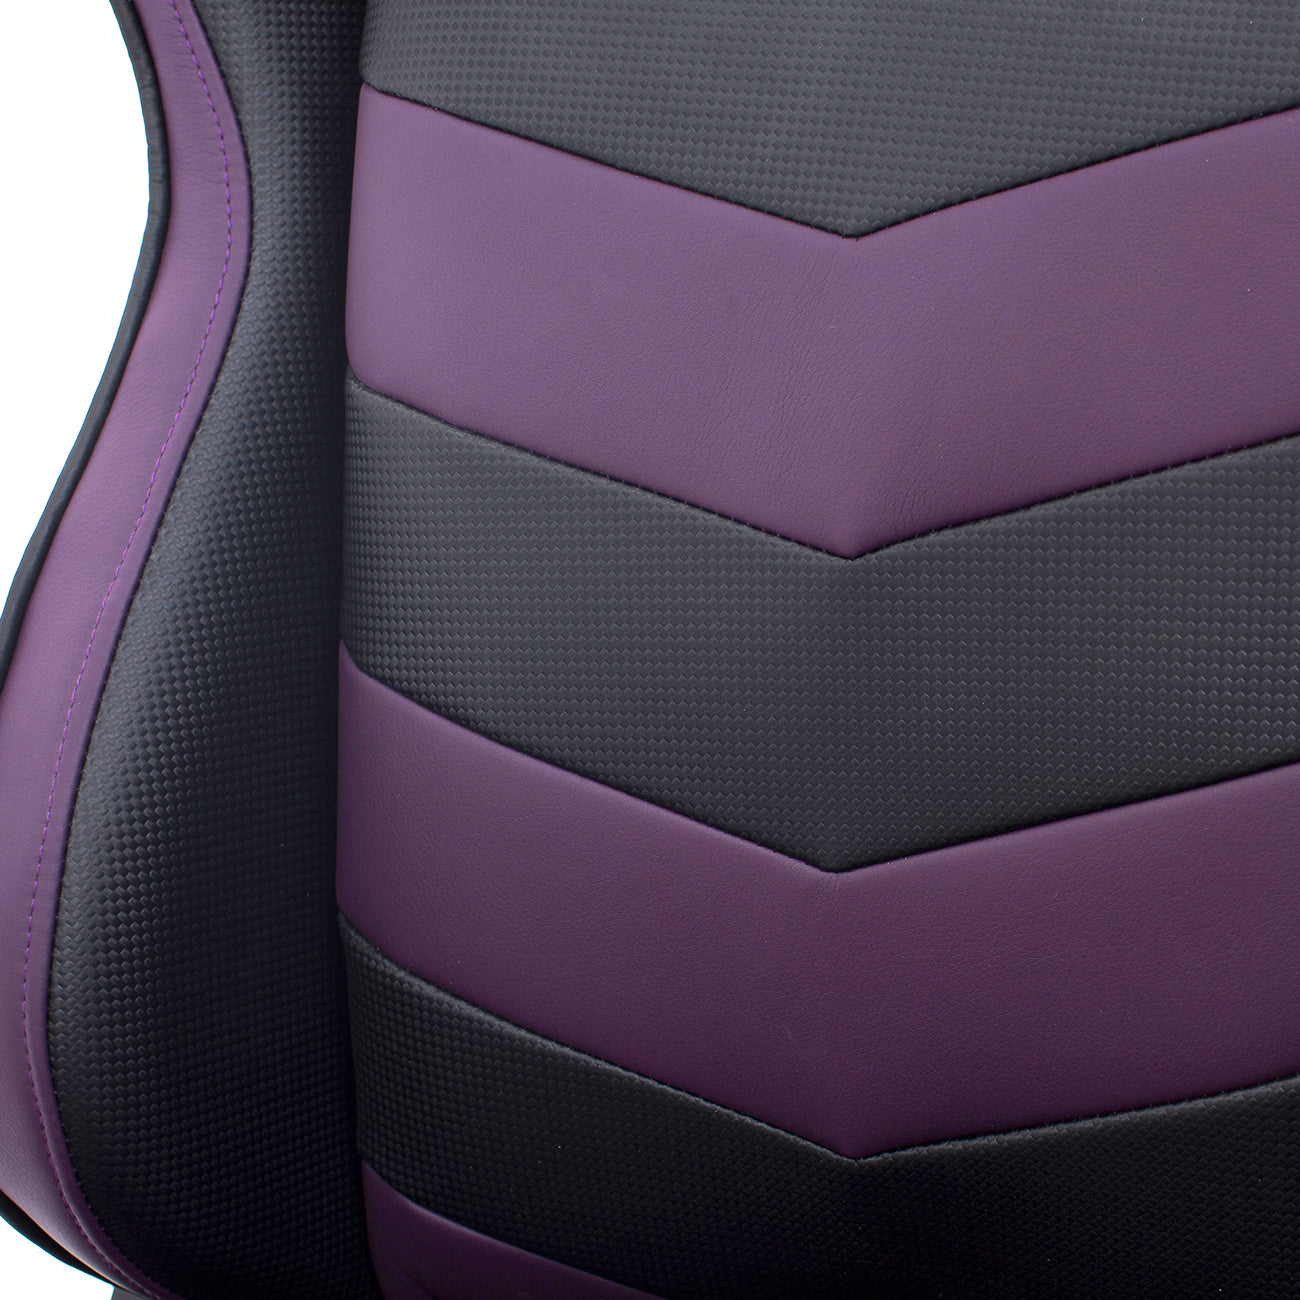 TS-61 Ergonomic High Back Racer Style Video Gaming Chair, Purple/Black